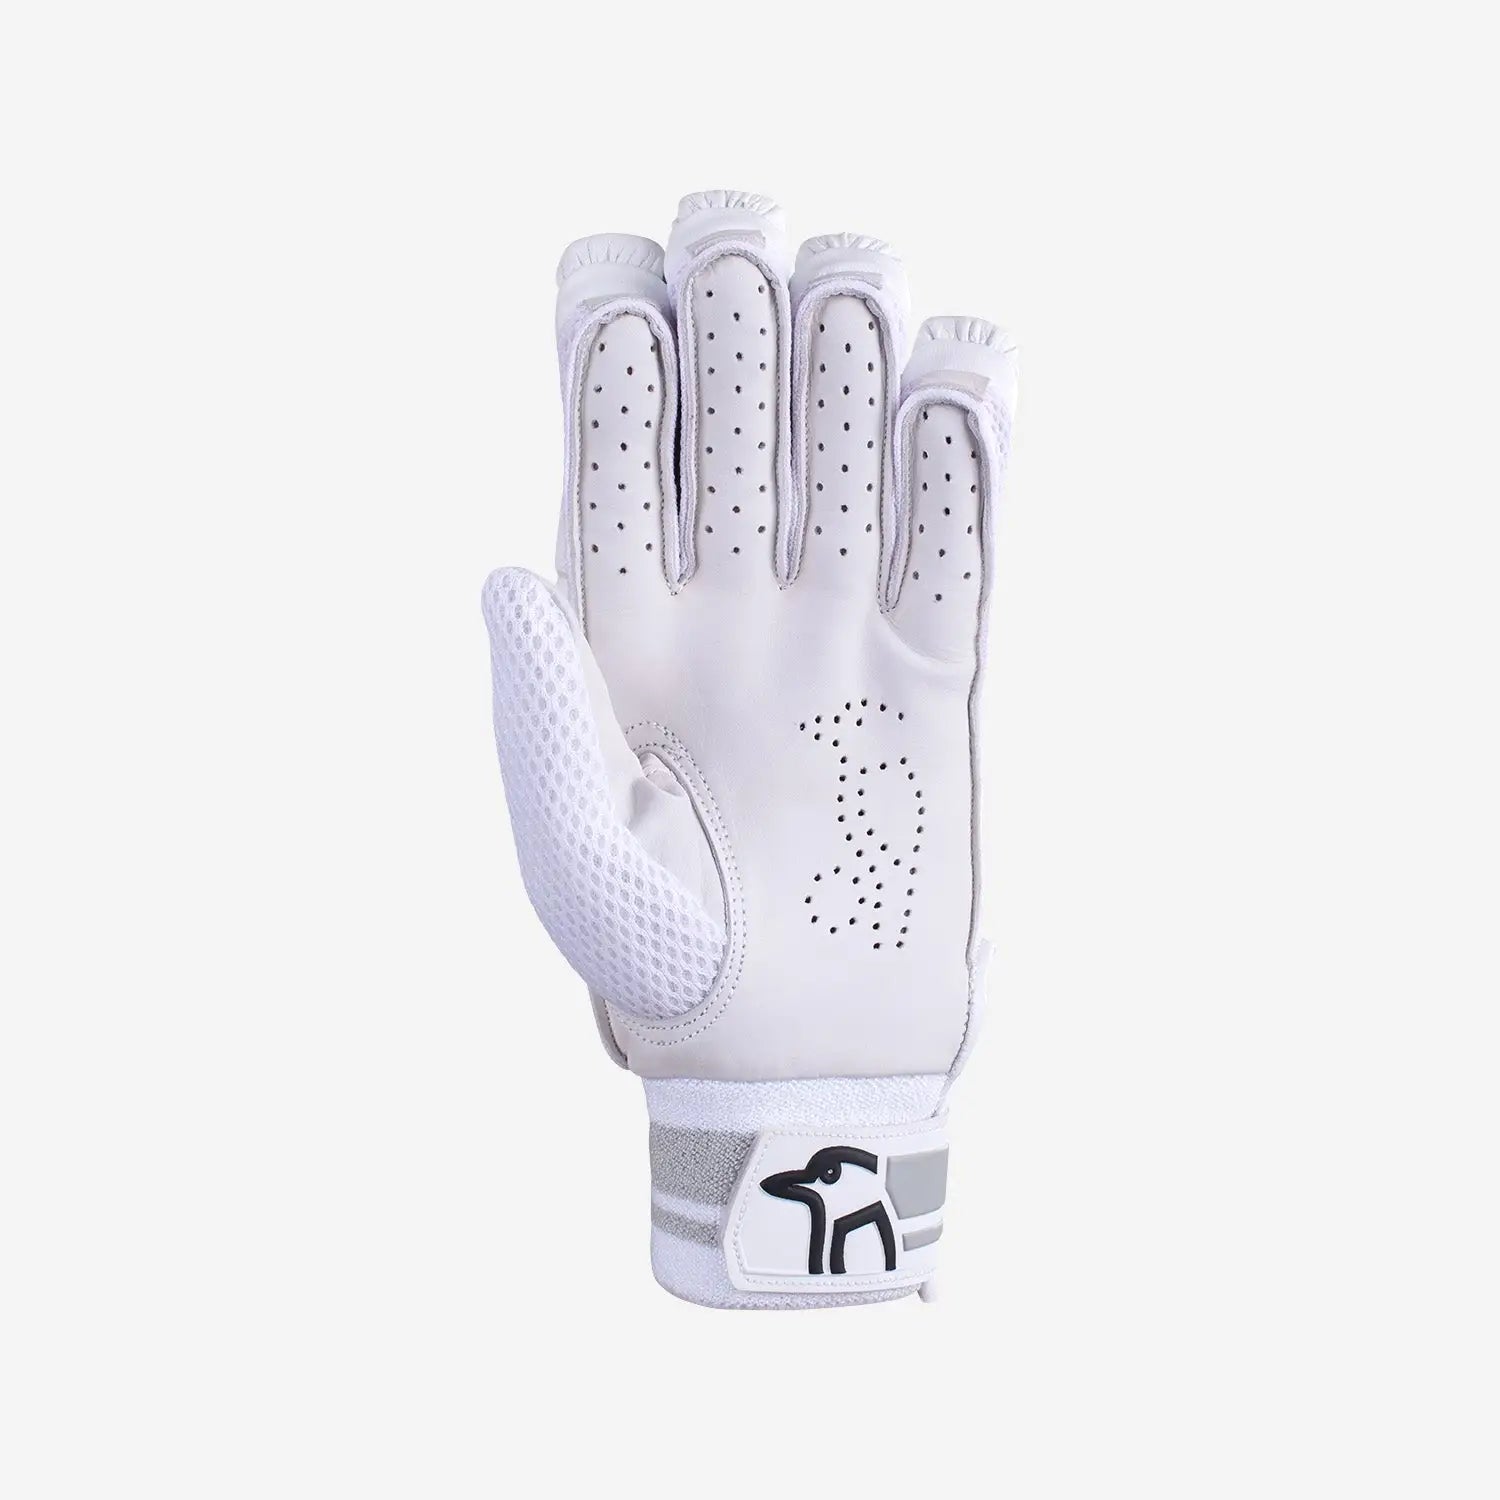 Kookaburra Ghost 3.1 Cricket Batting Gloves - Adult RH - GLOVE - BATTING